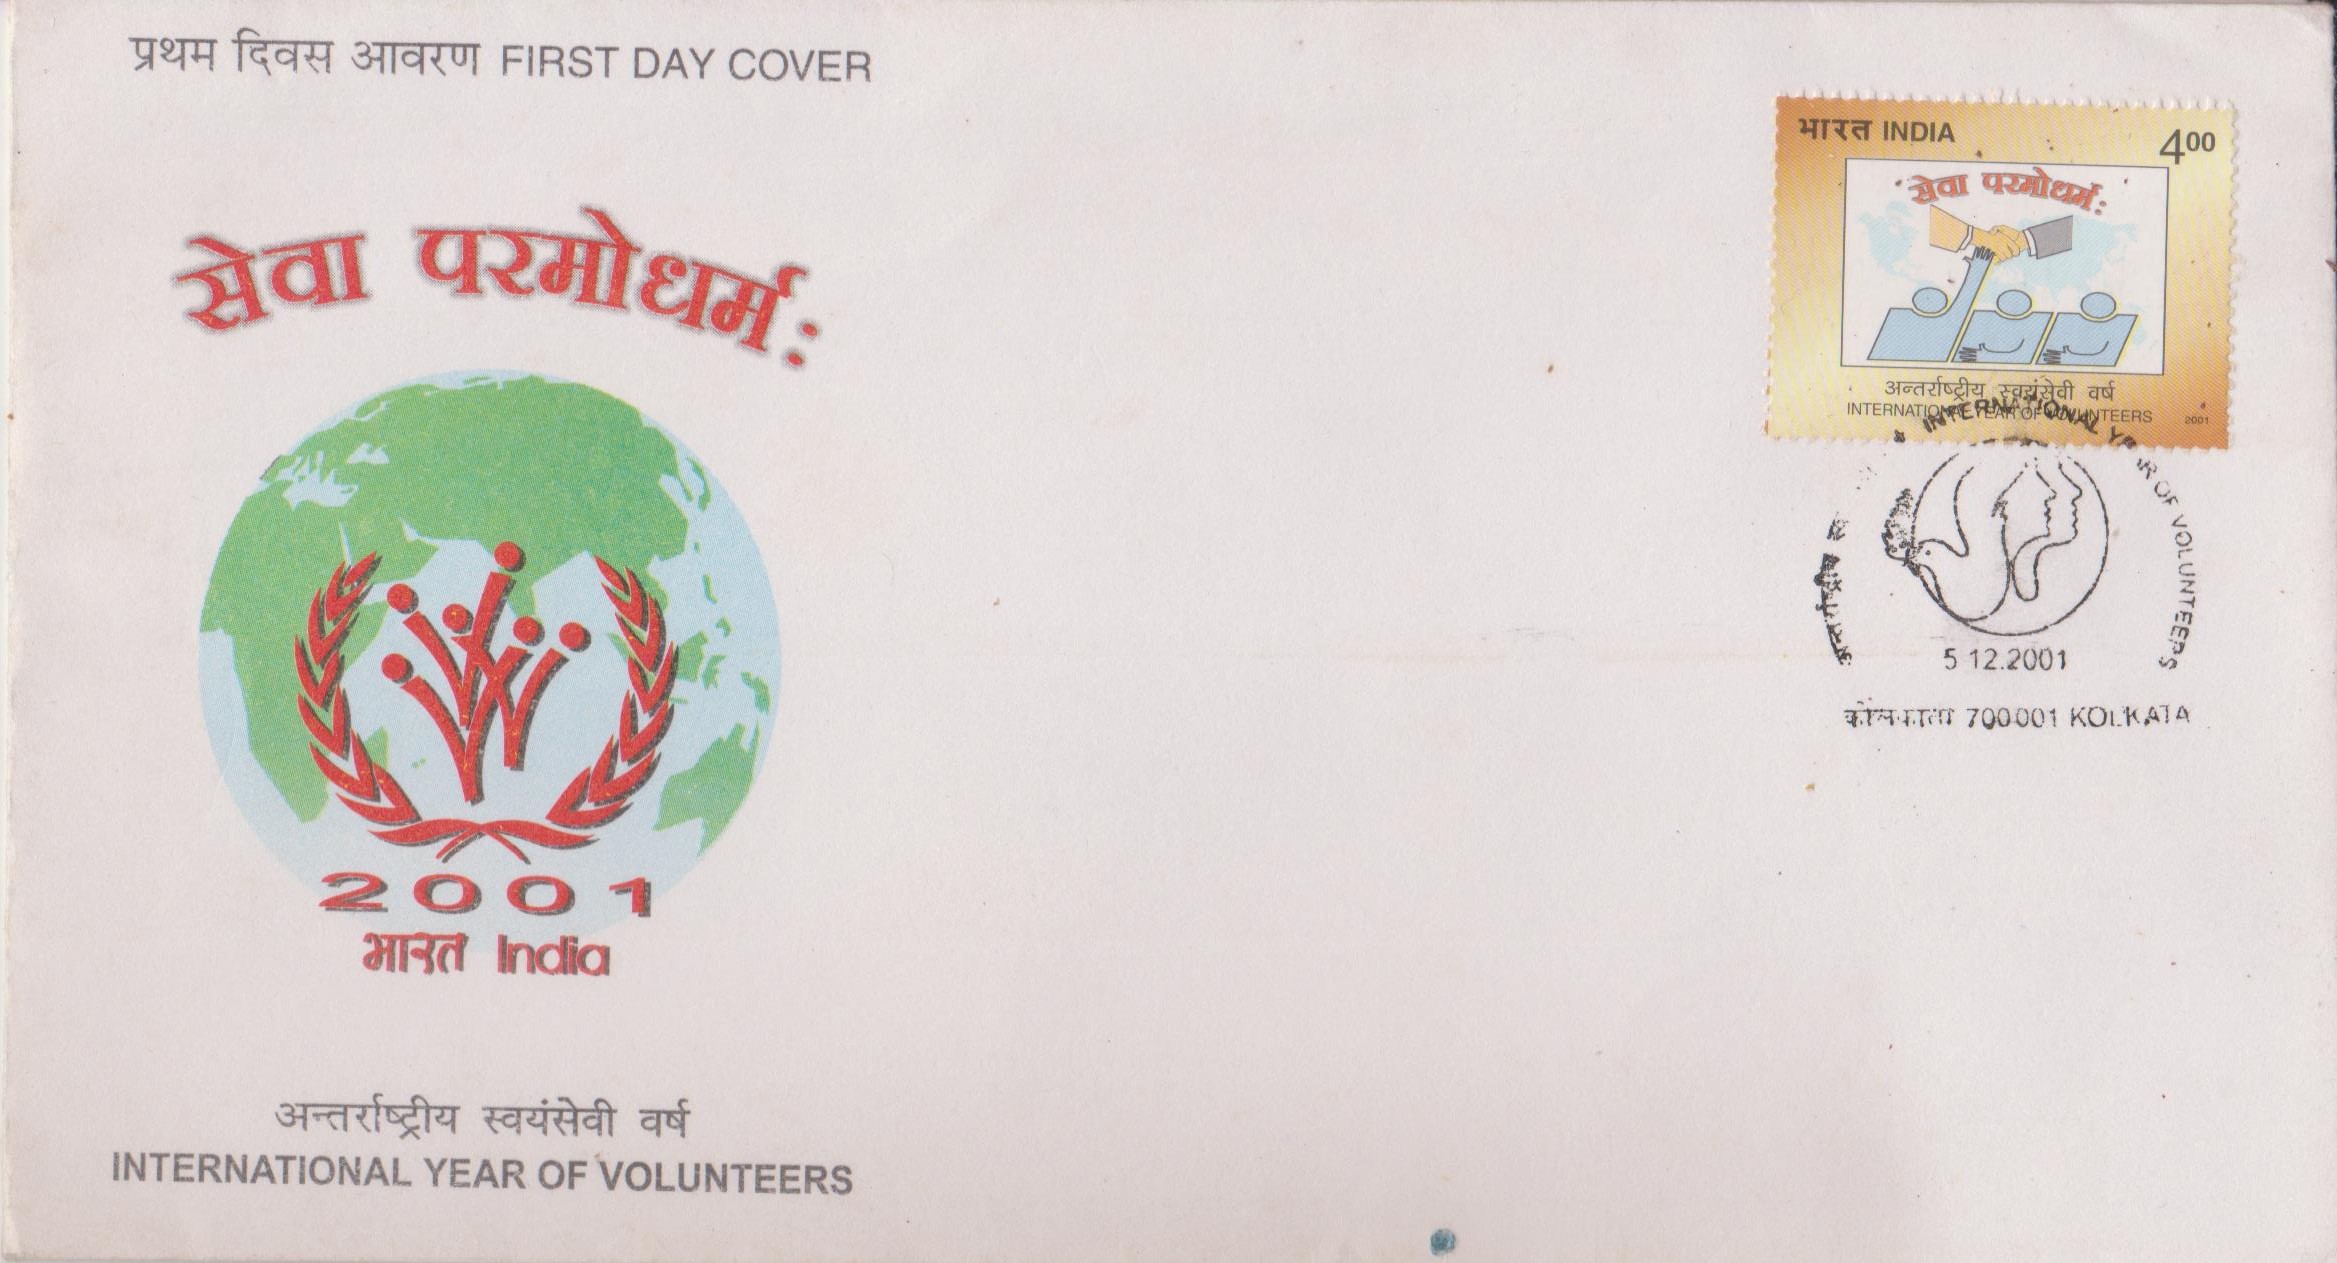 India on International Year of Volunteers 2001